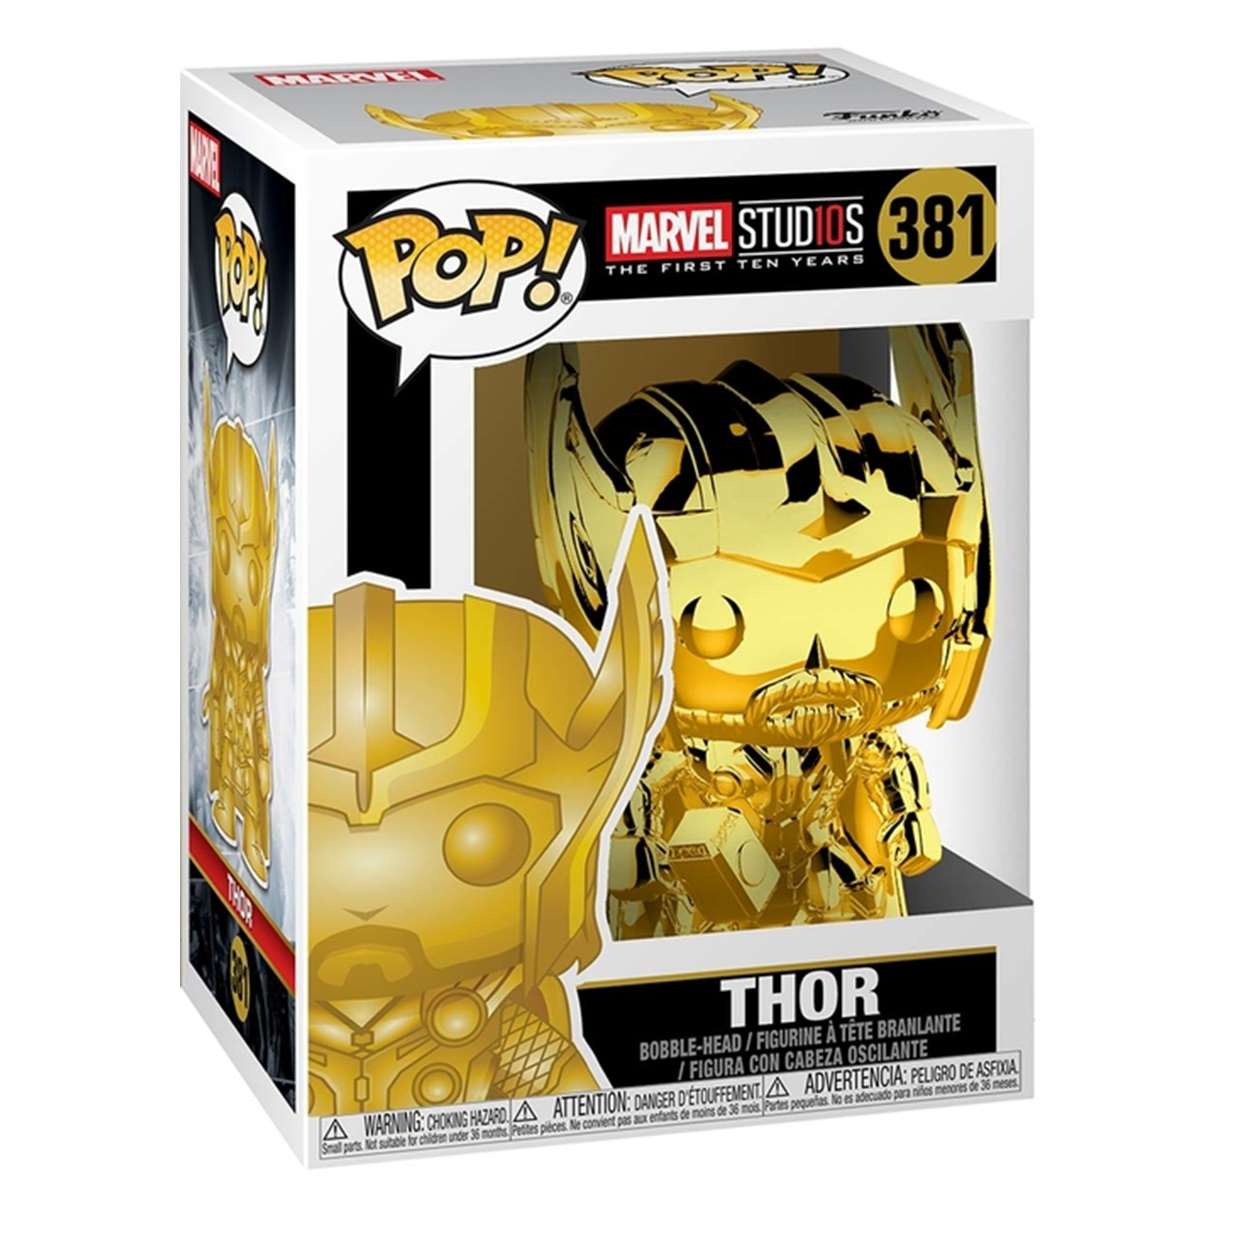 Thor #381 Figura Marvel Studios 10th Anniversary Funko Pop!